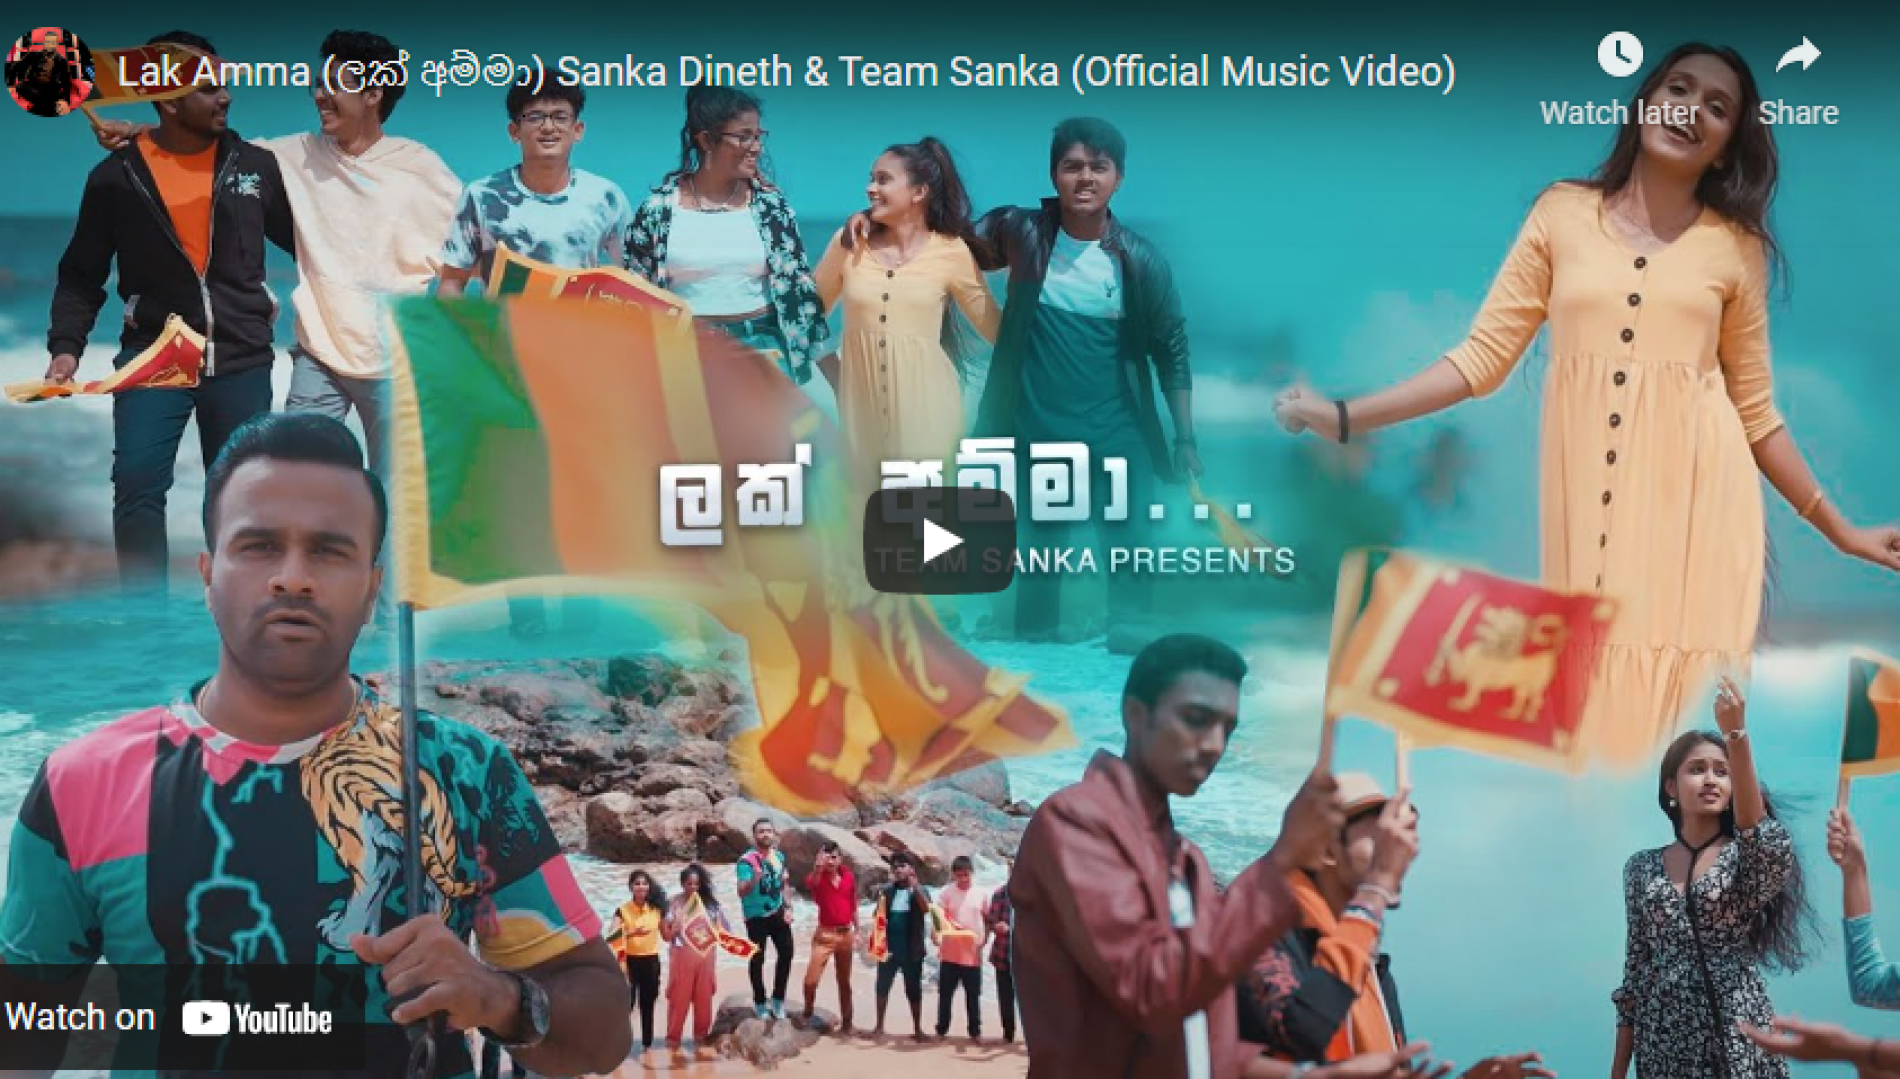 New Music : Lak Amma (ලක් අම්මා) Sanka Dineth & Team Sanka (Official Music Video)